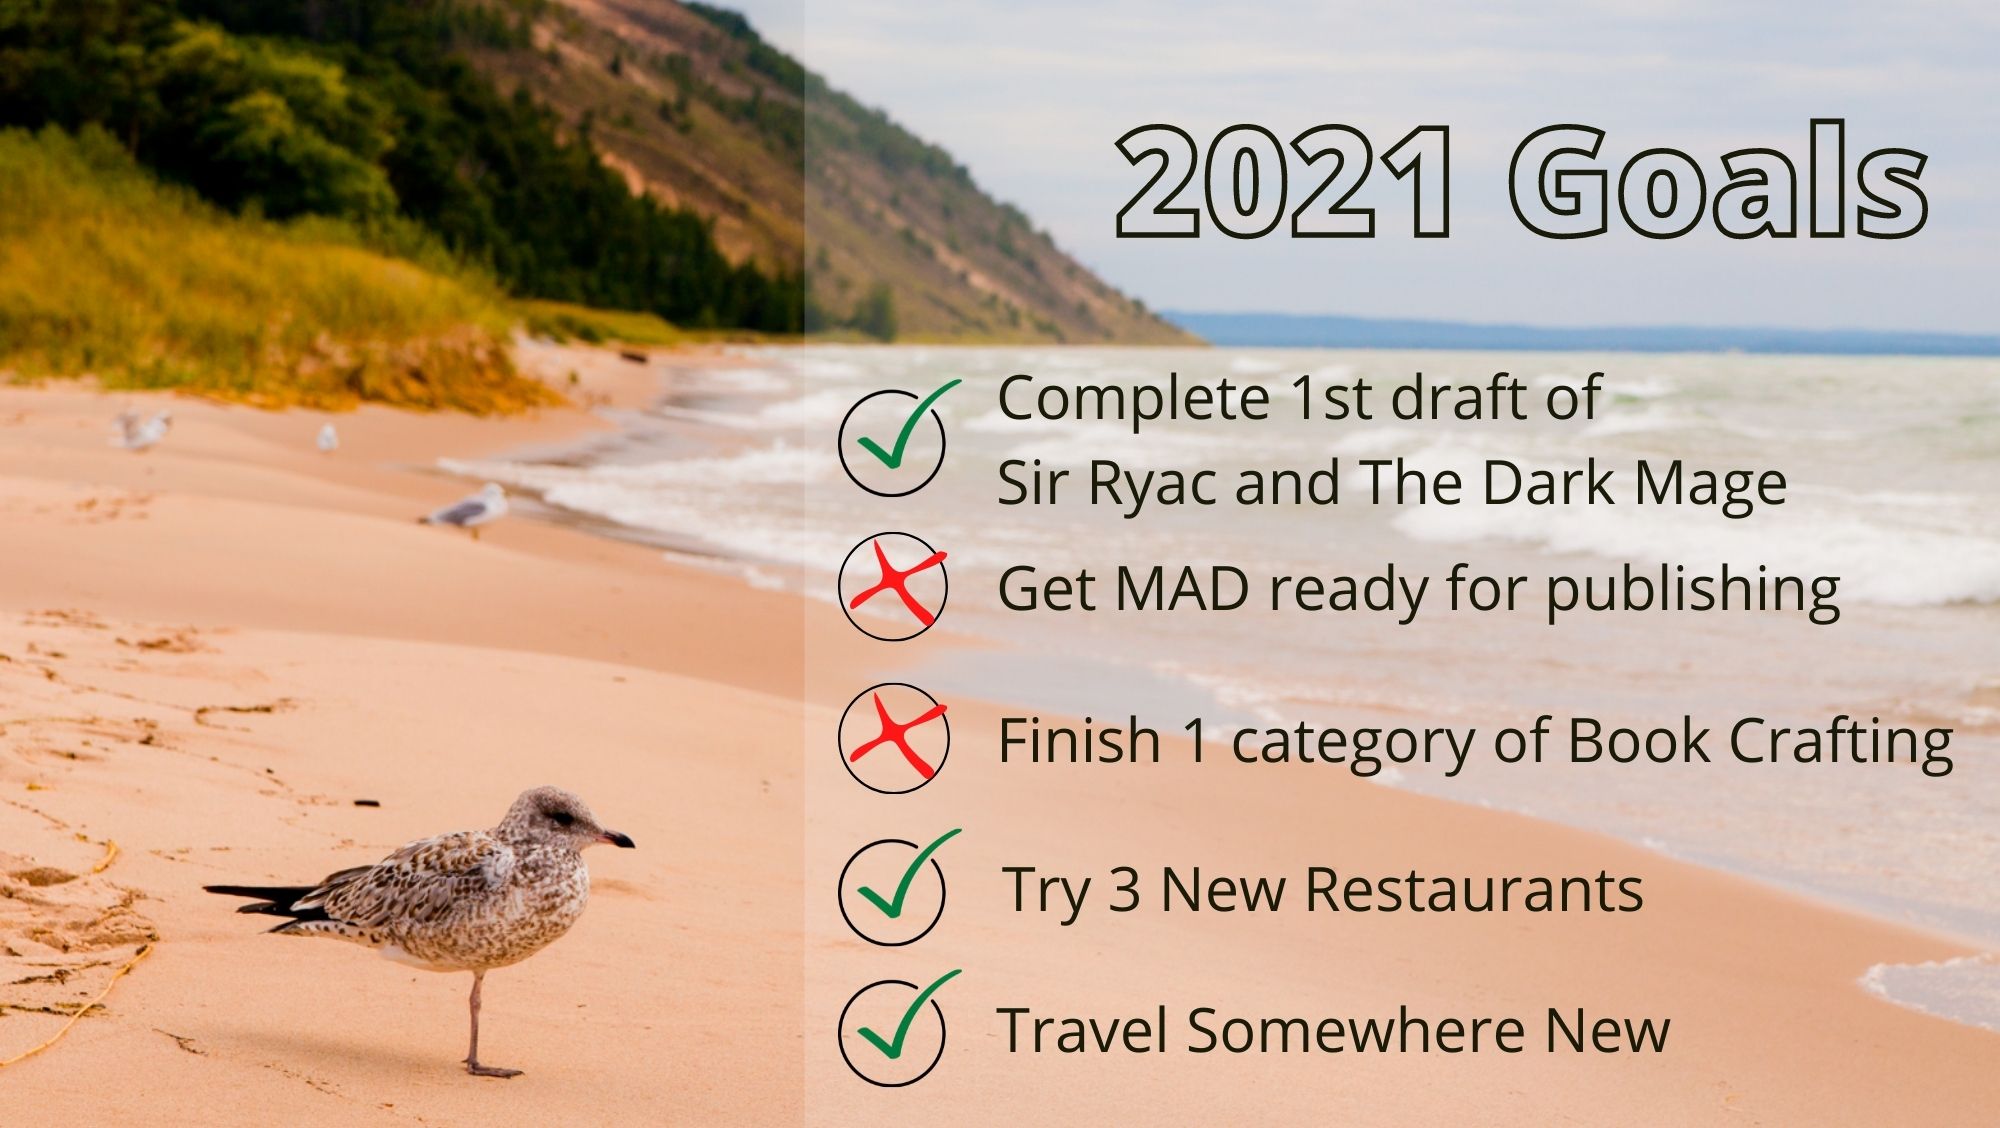 New Years Resolution 2021 Goals November Update1